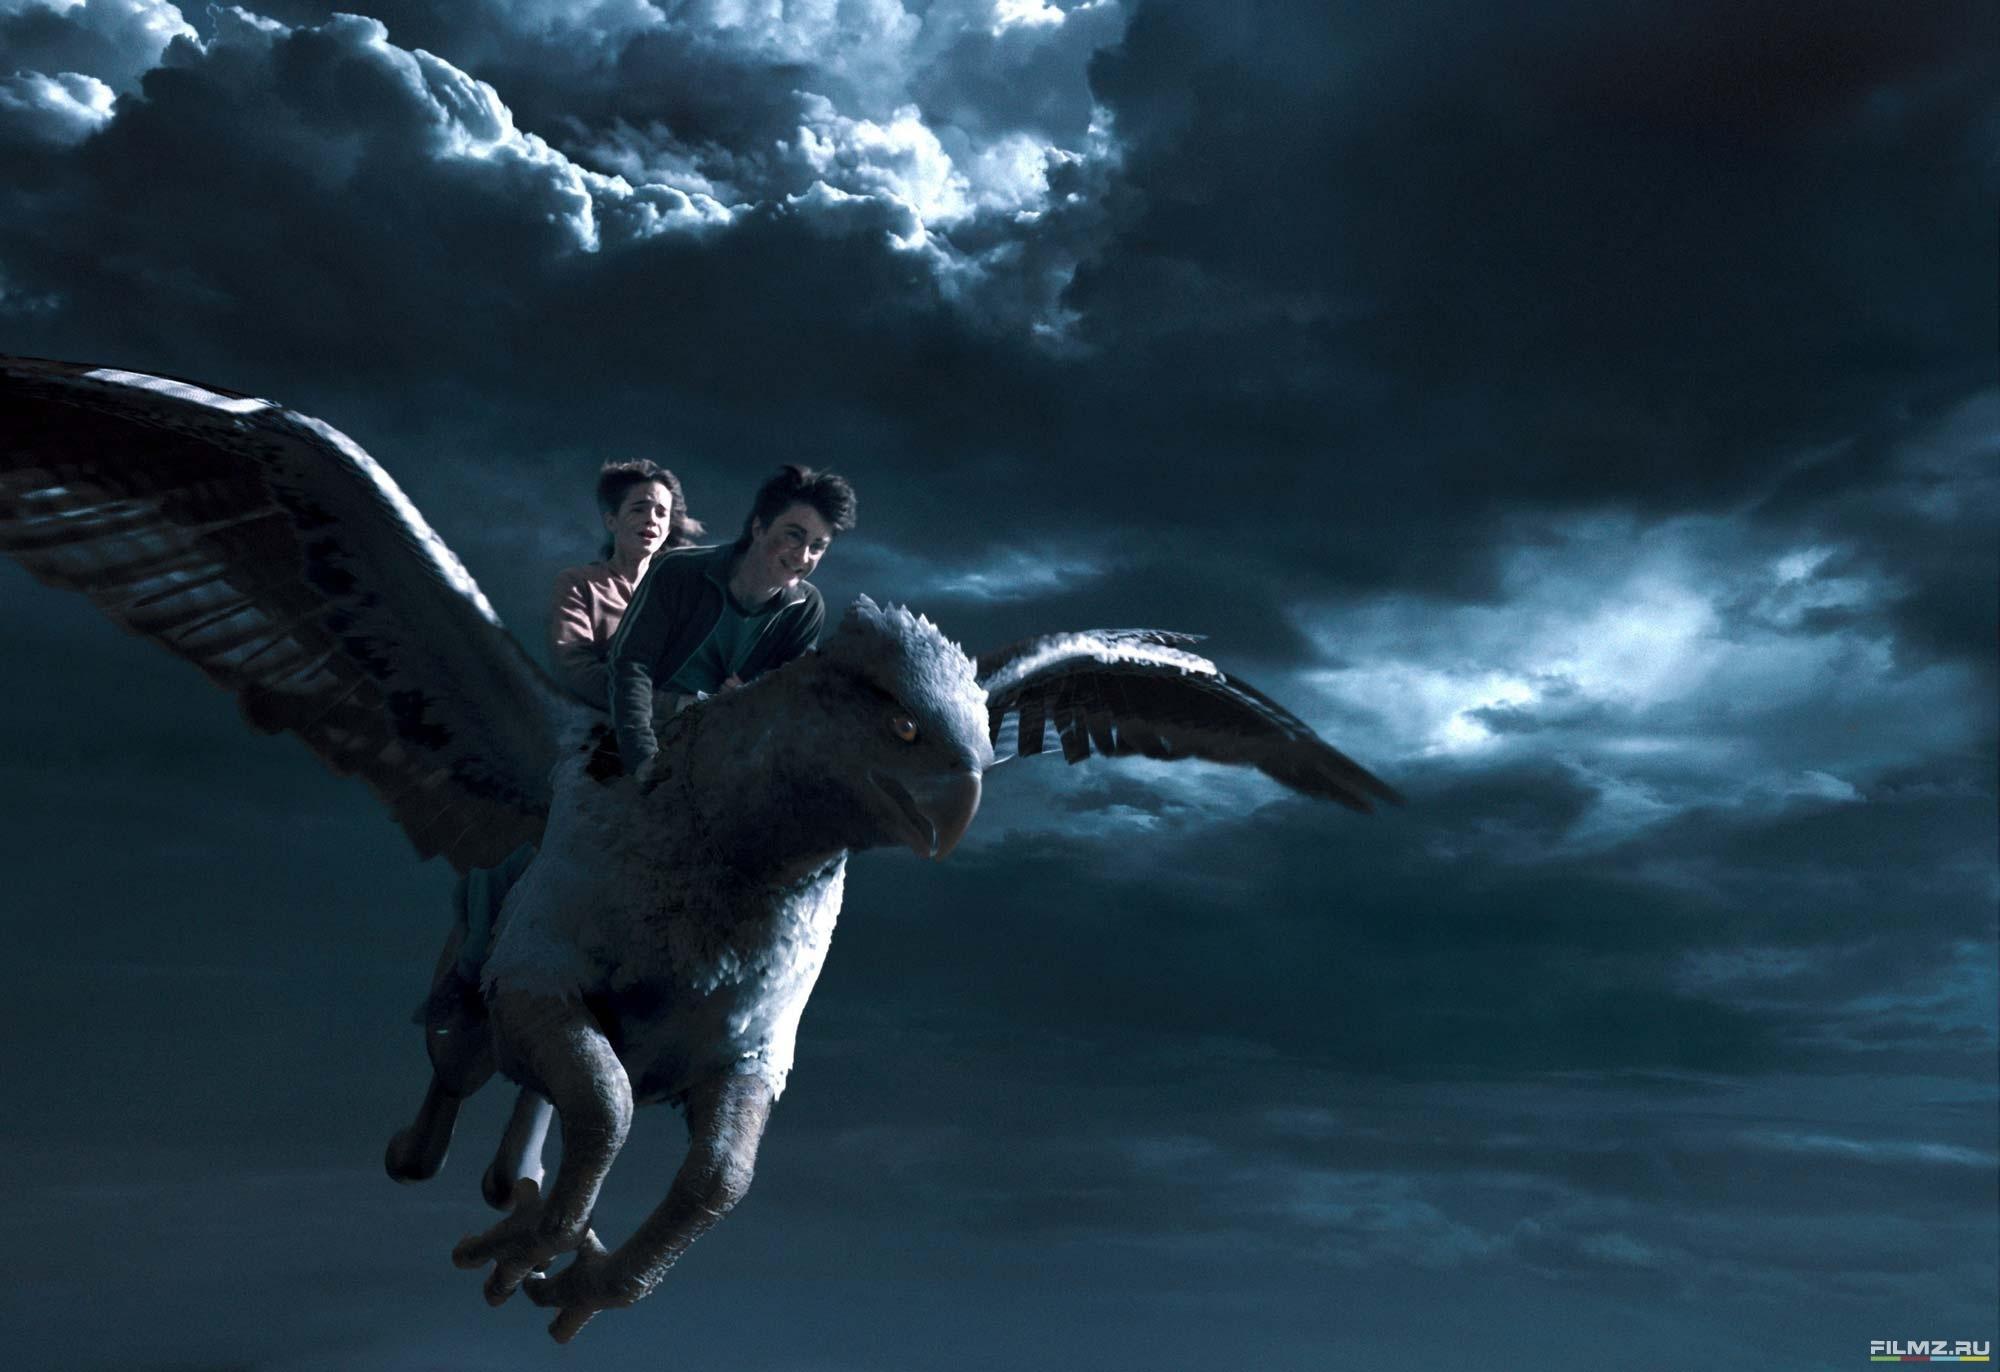 Flying around Hogwarts Potter and the Prisoner of Azkaban